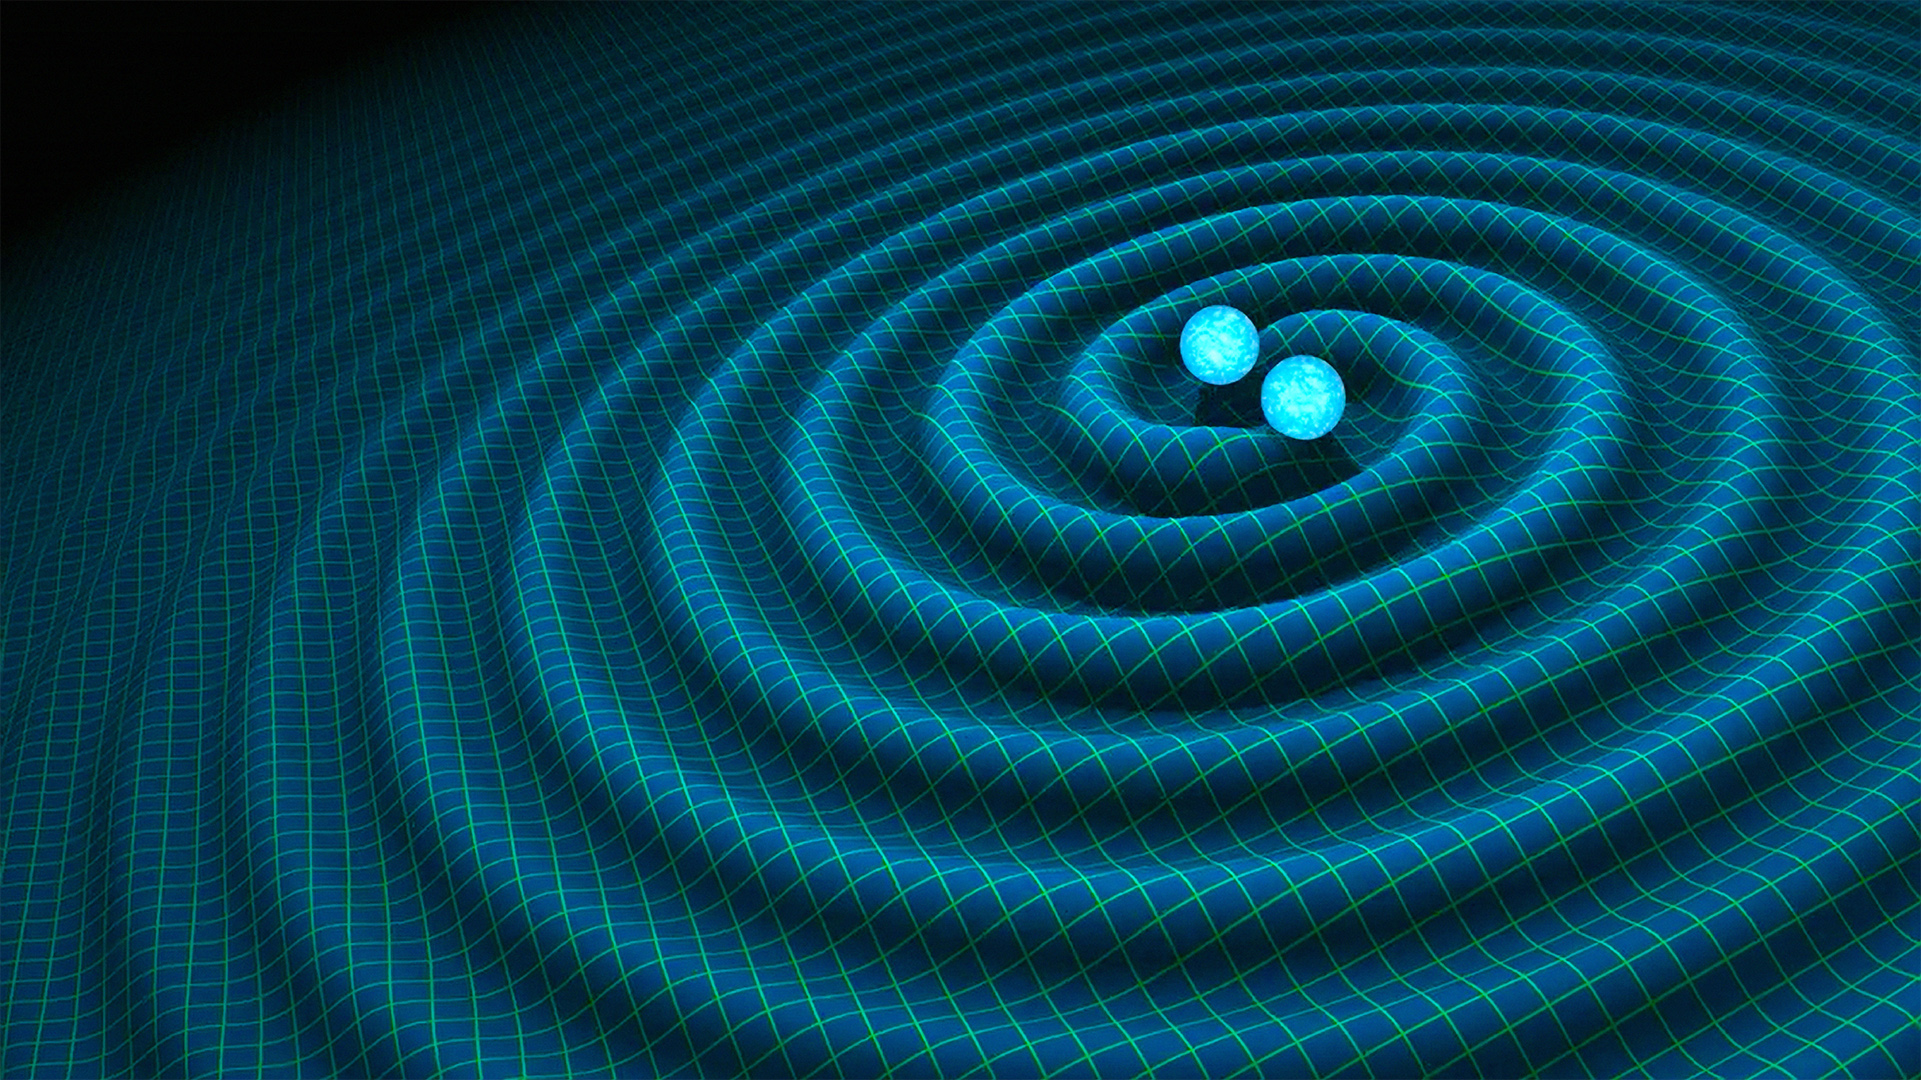 Gravitational Waves and Binary Black Holes